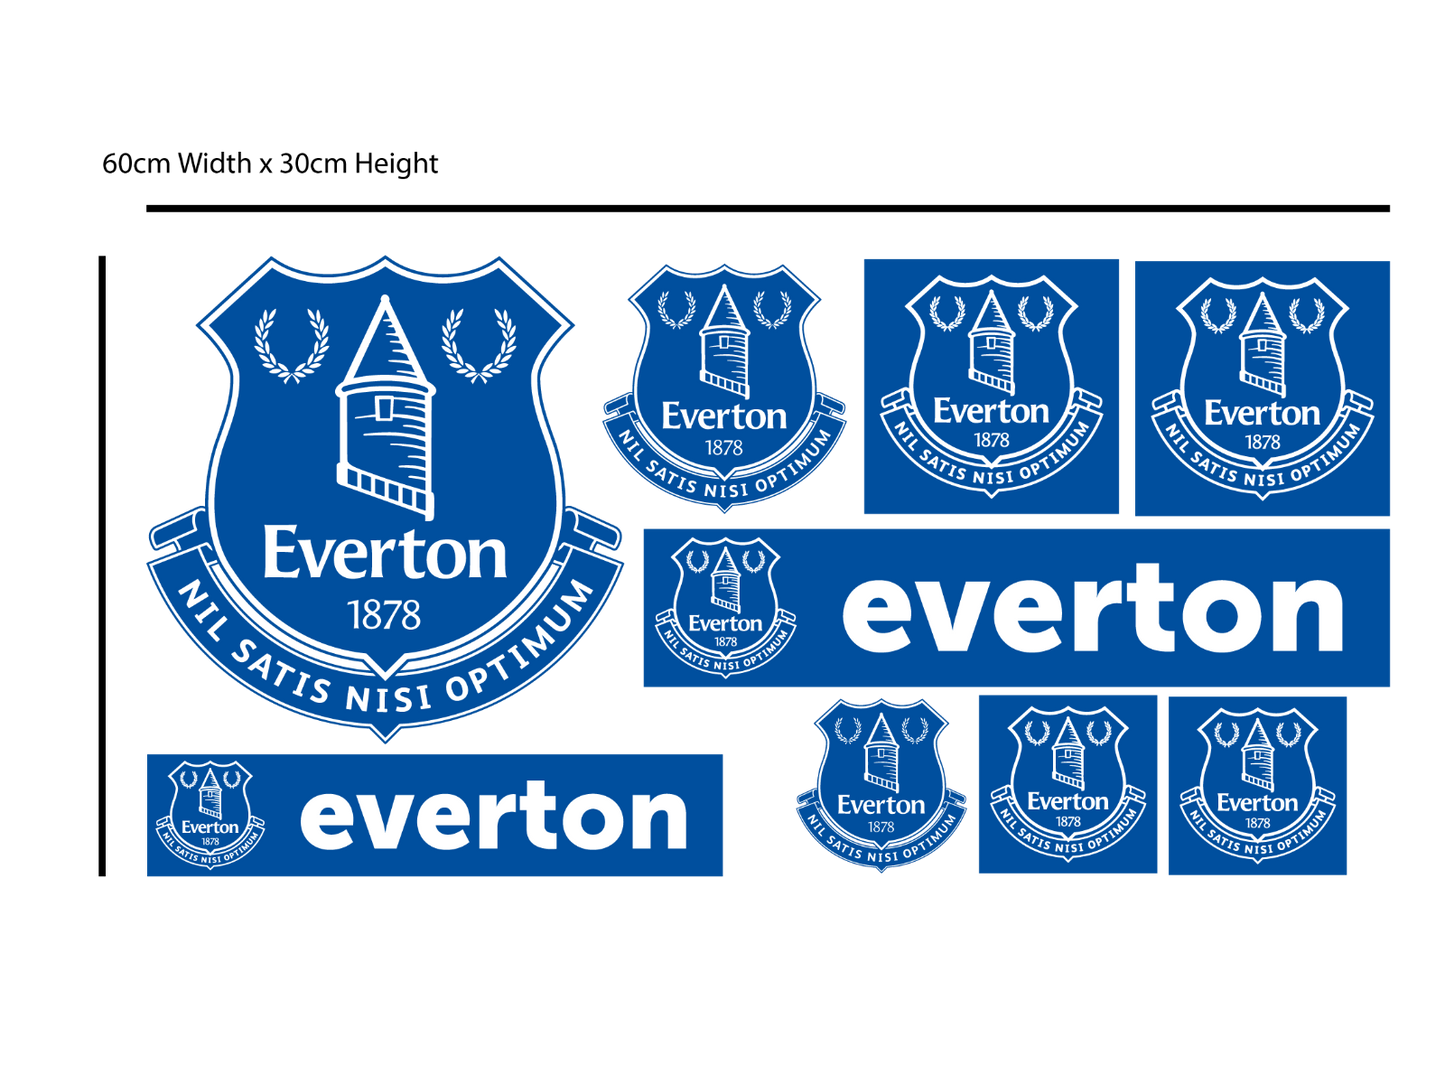 Everton Football Club - Crest + Toffees Wall Sticker Set